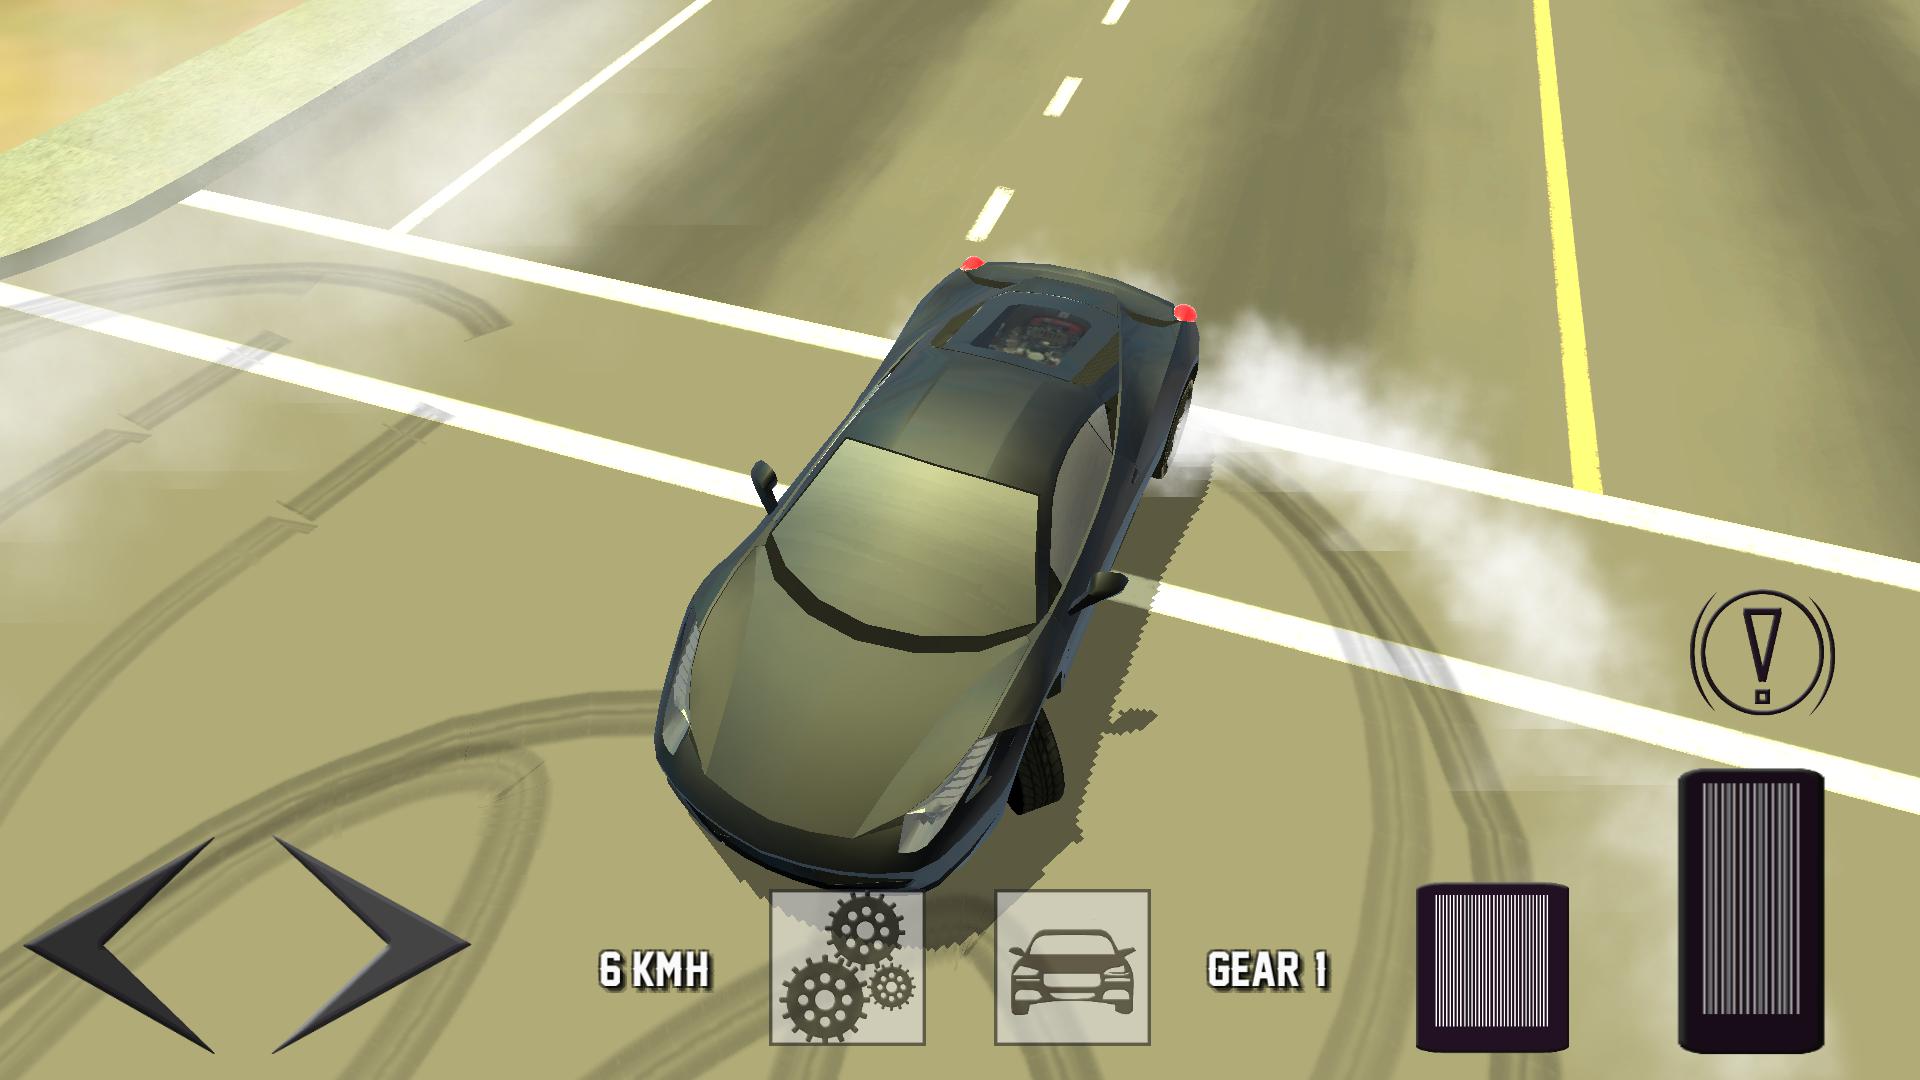 Extreme Racing Car Simulator